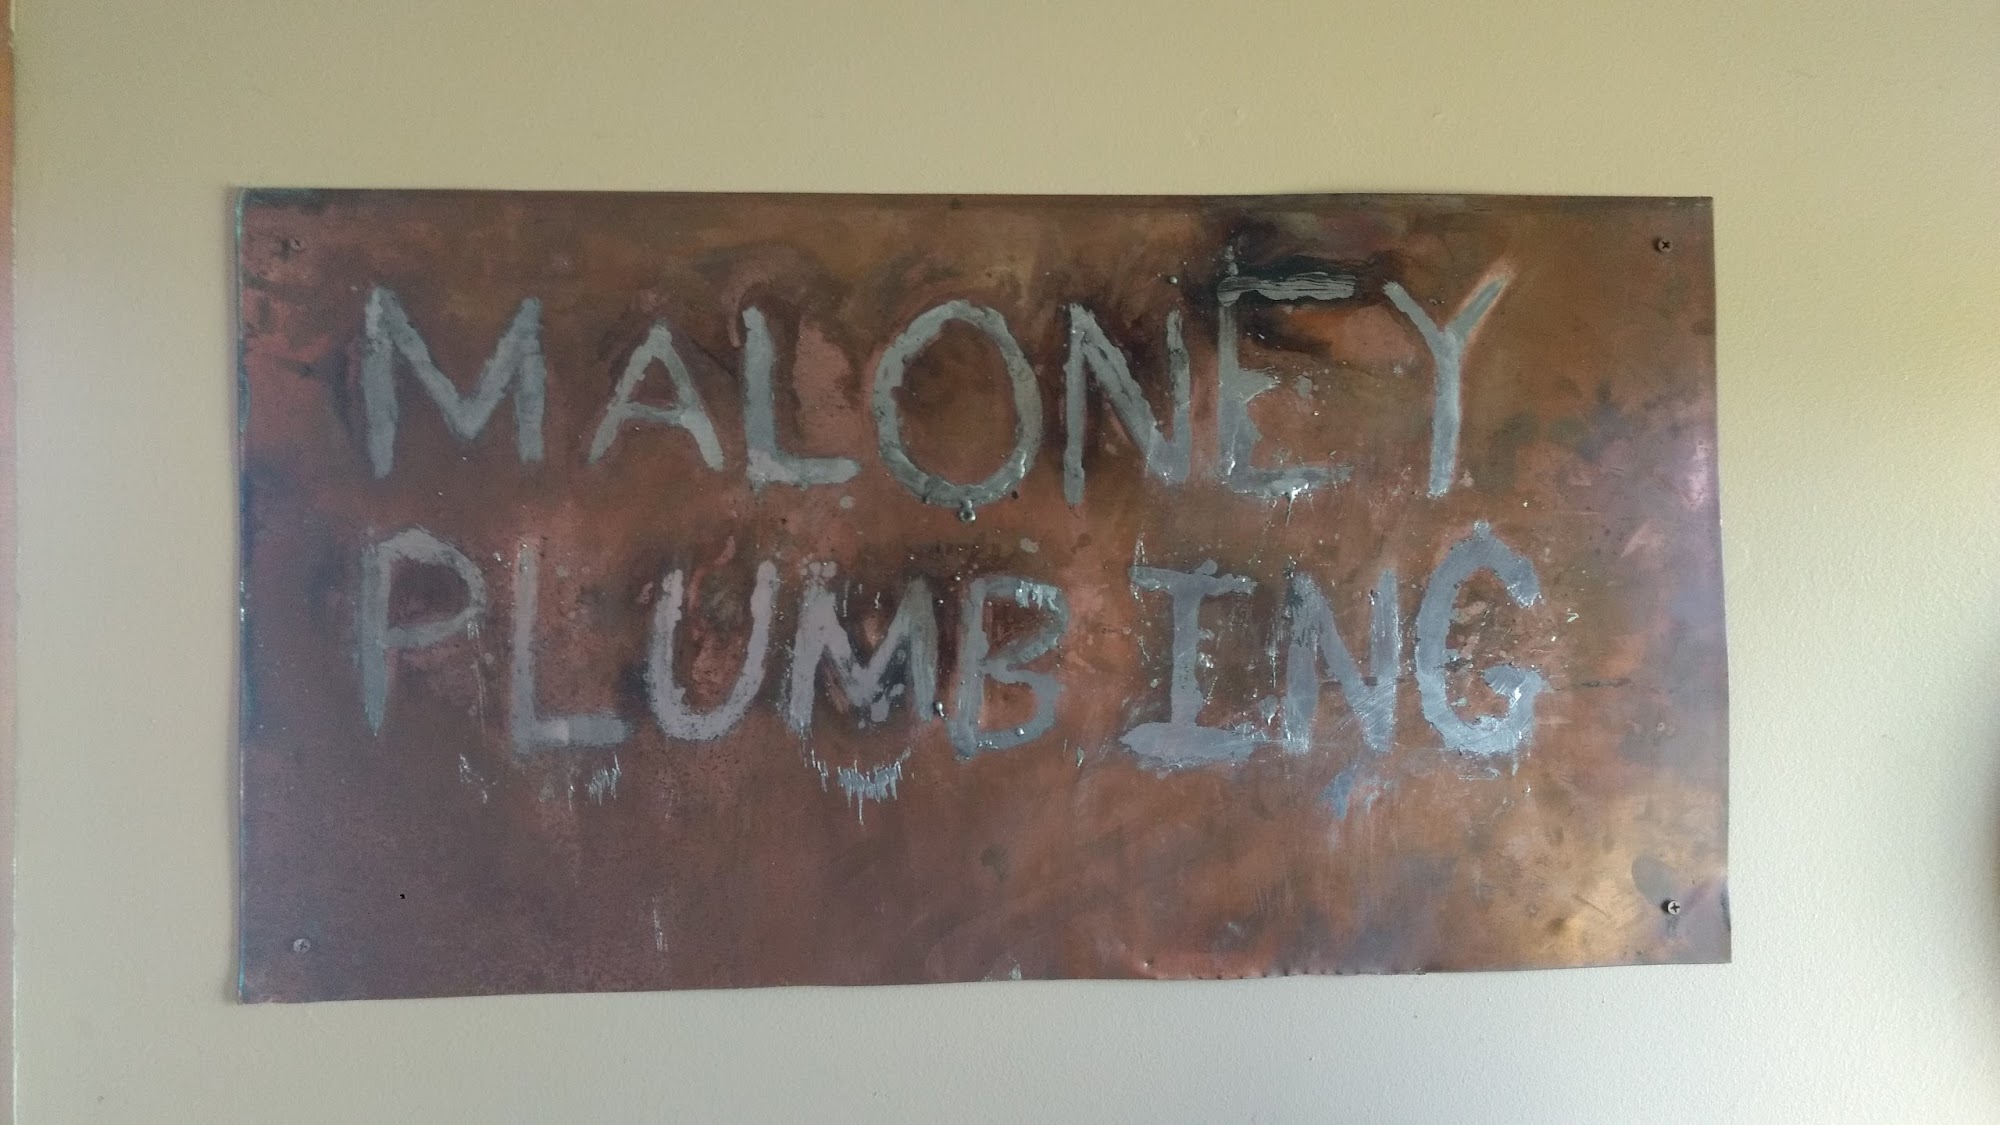 Patrick Maloney Plumbing